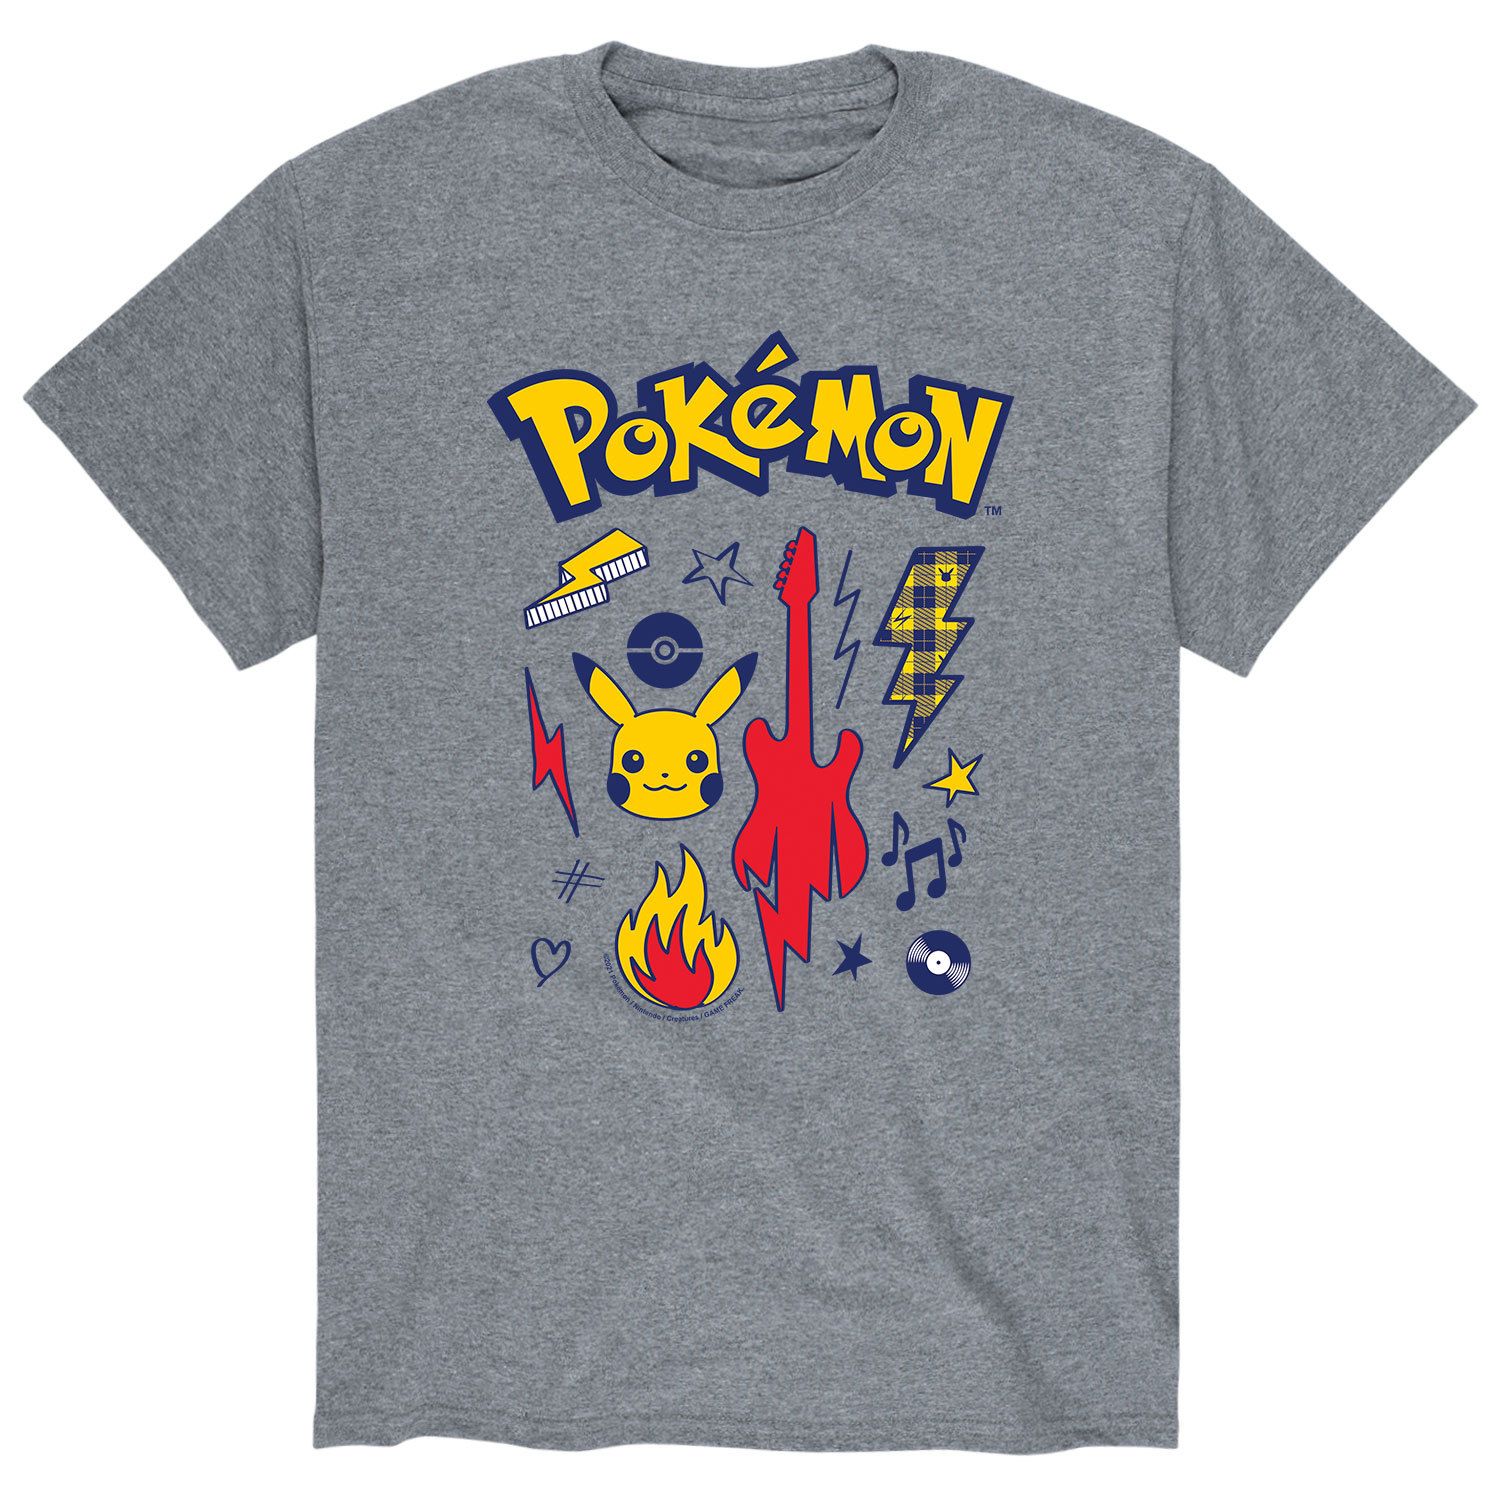 Мужская футболка Pokemon Punk Icons Licensed Character набор pokemon футболка obstagoon punk серая m кружка для свч